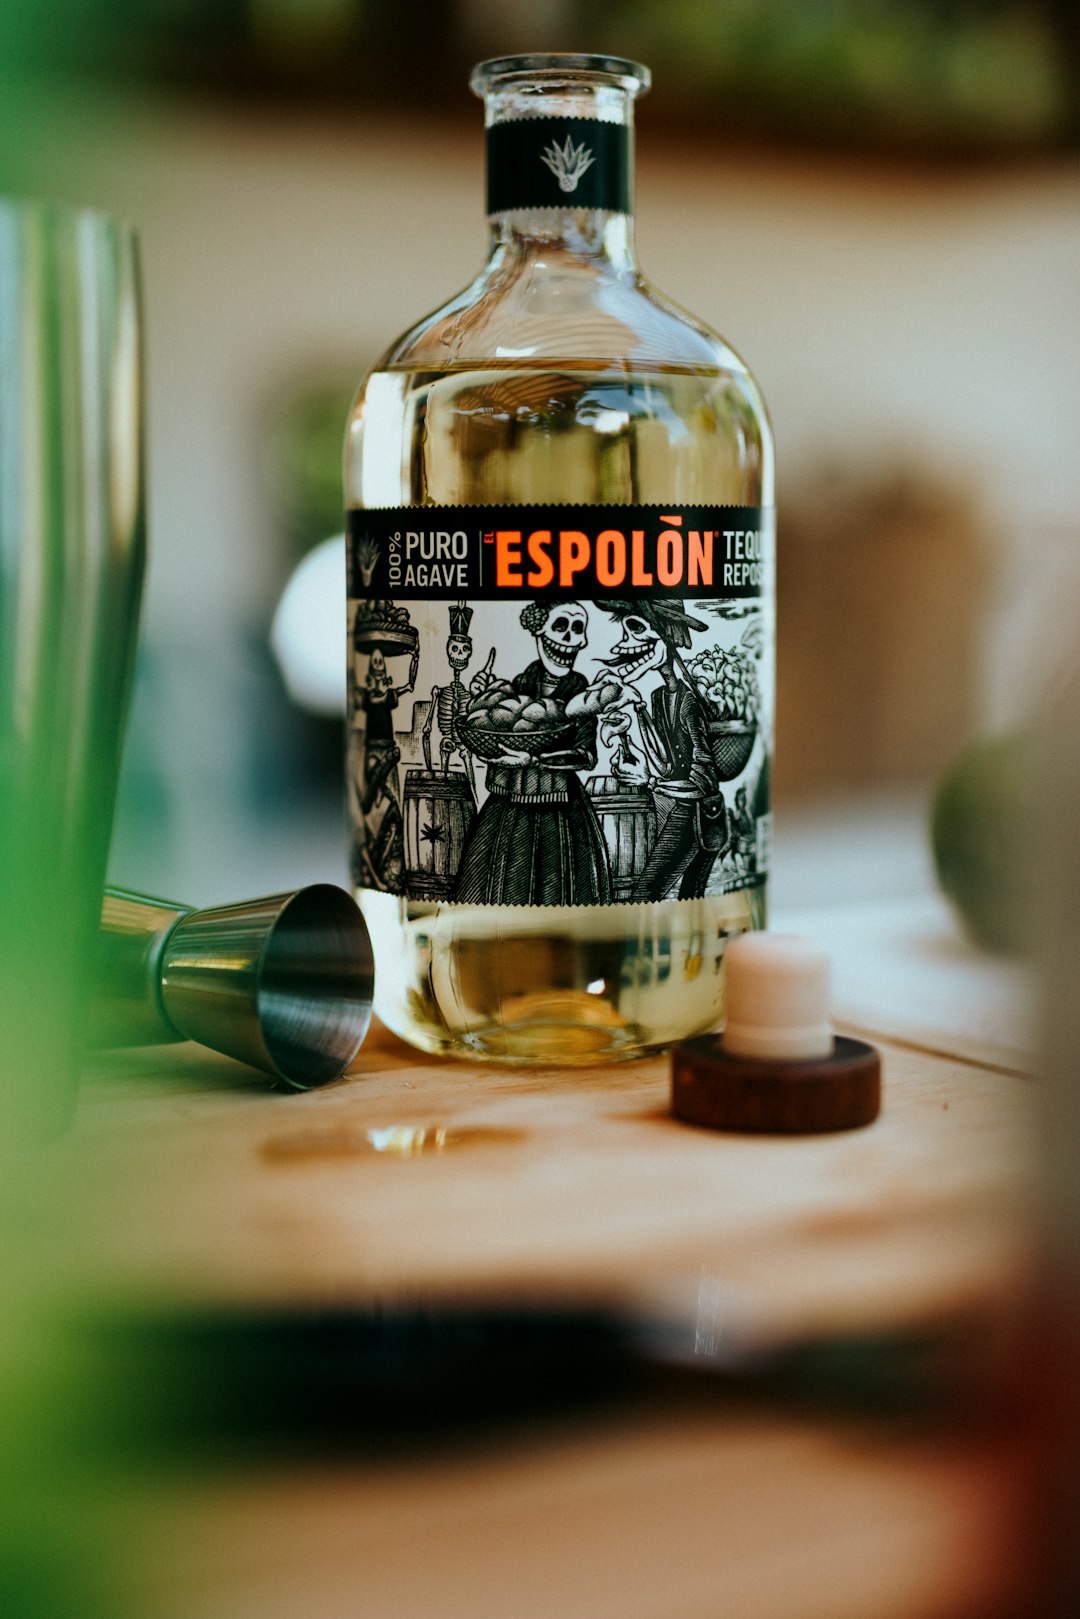 Espolòn Tequila labeled bottle